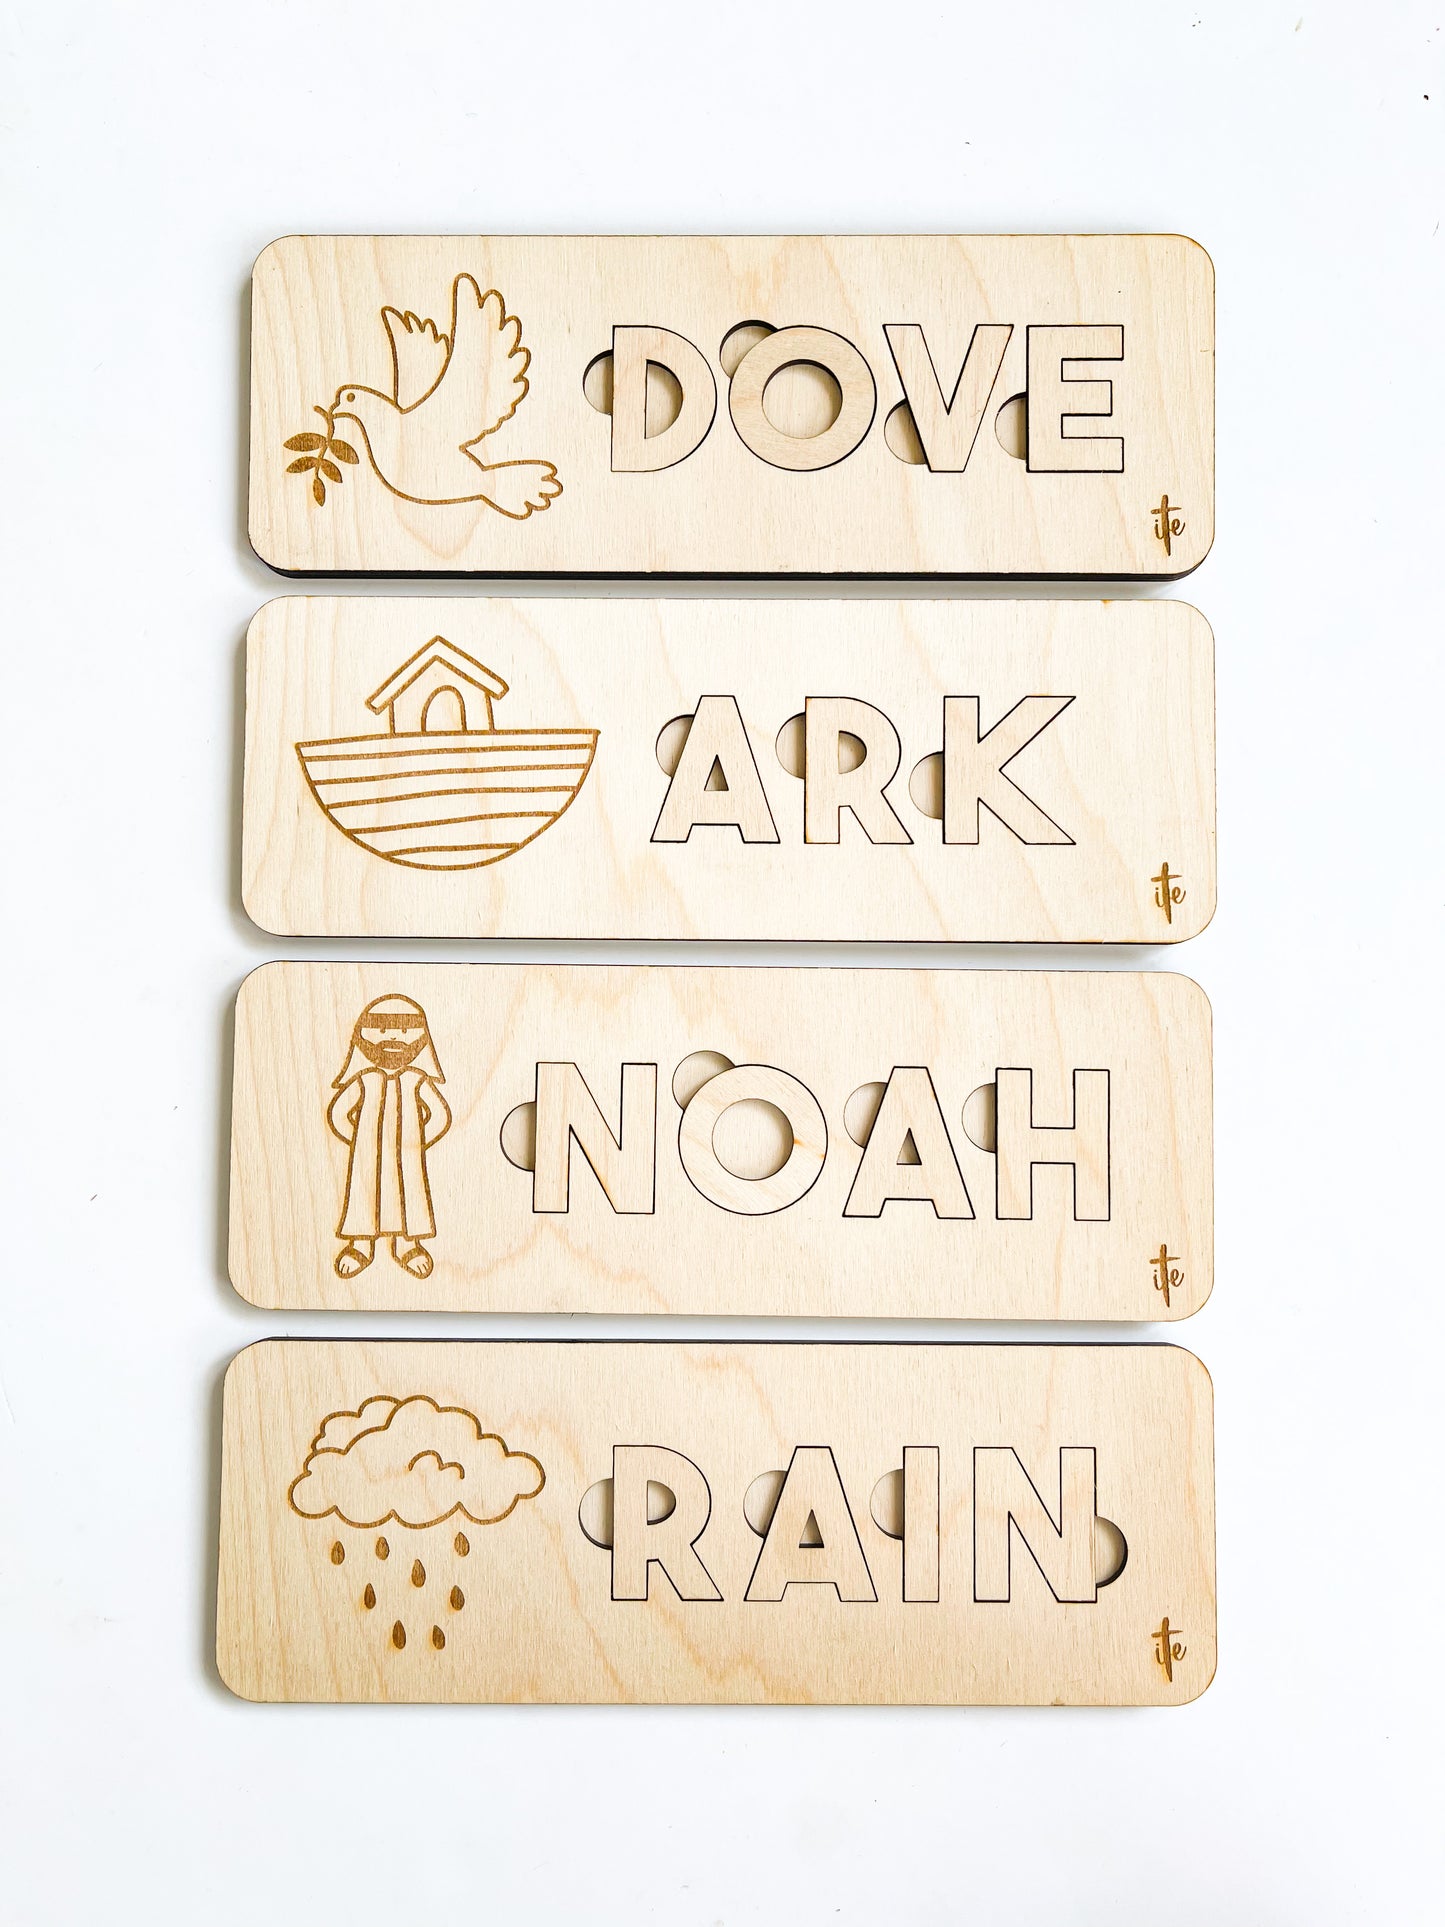 Noah's Ark Spelling Puzzle Set